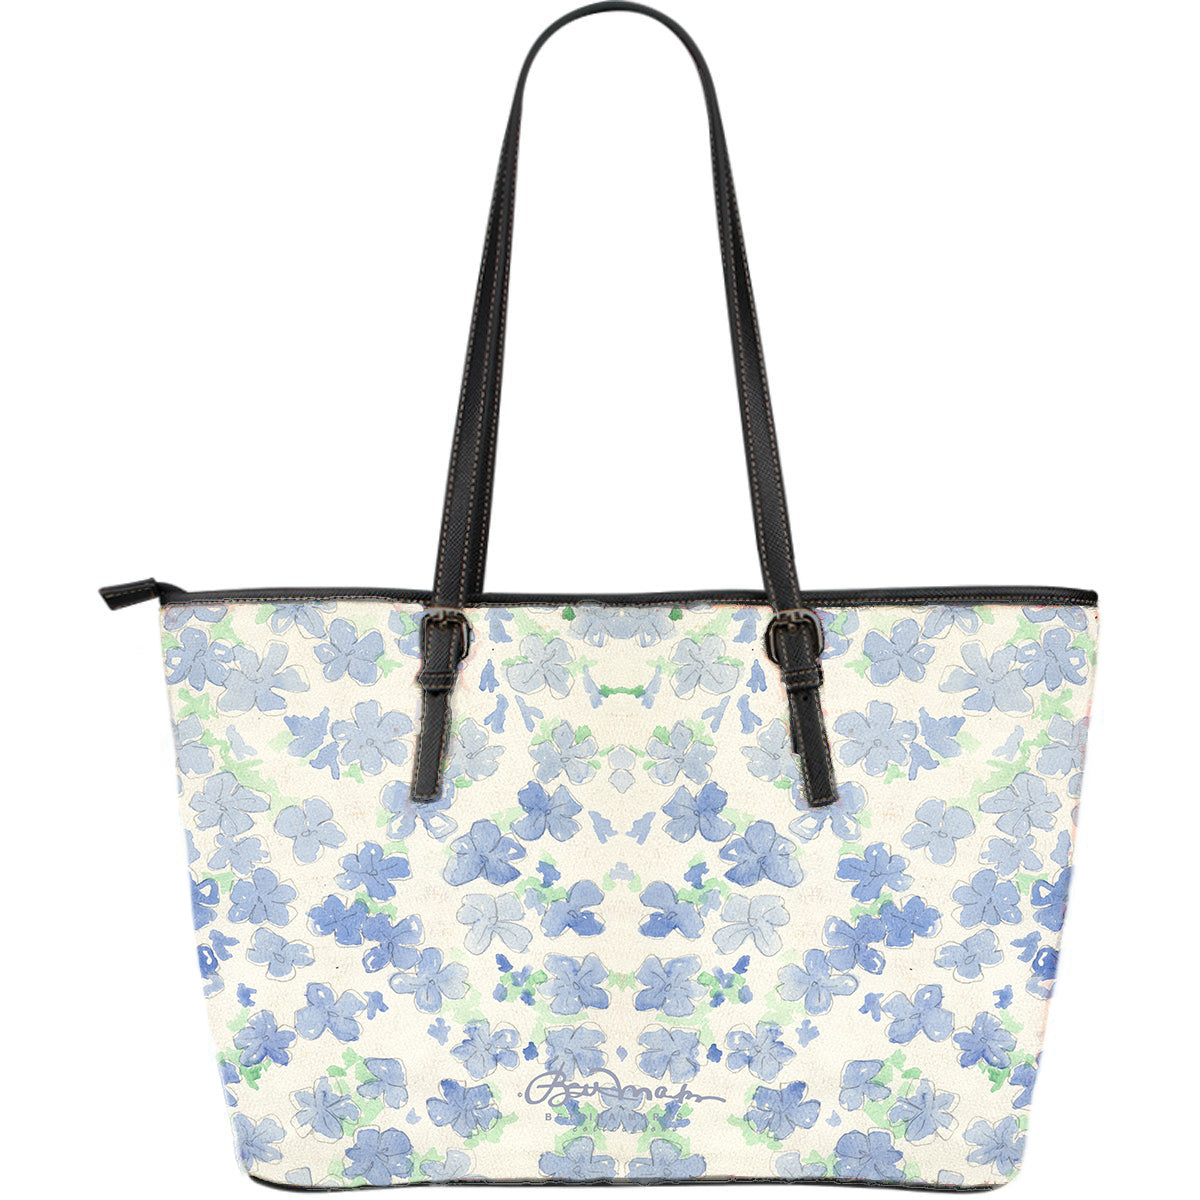 Blu&White Watercolor Floral Large Tote Bag